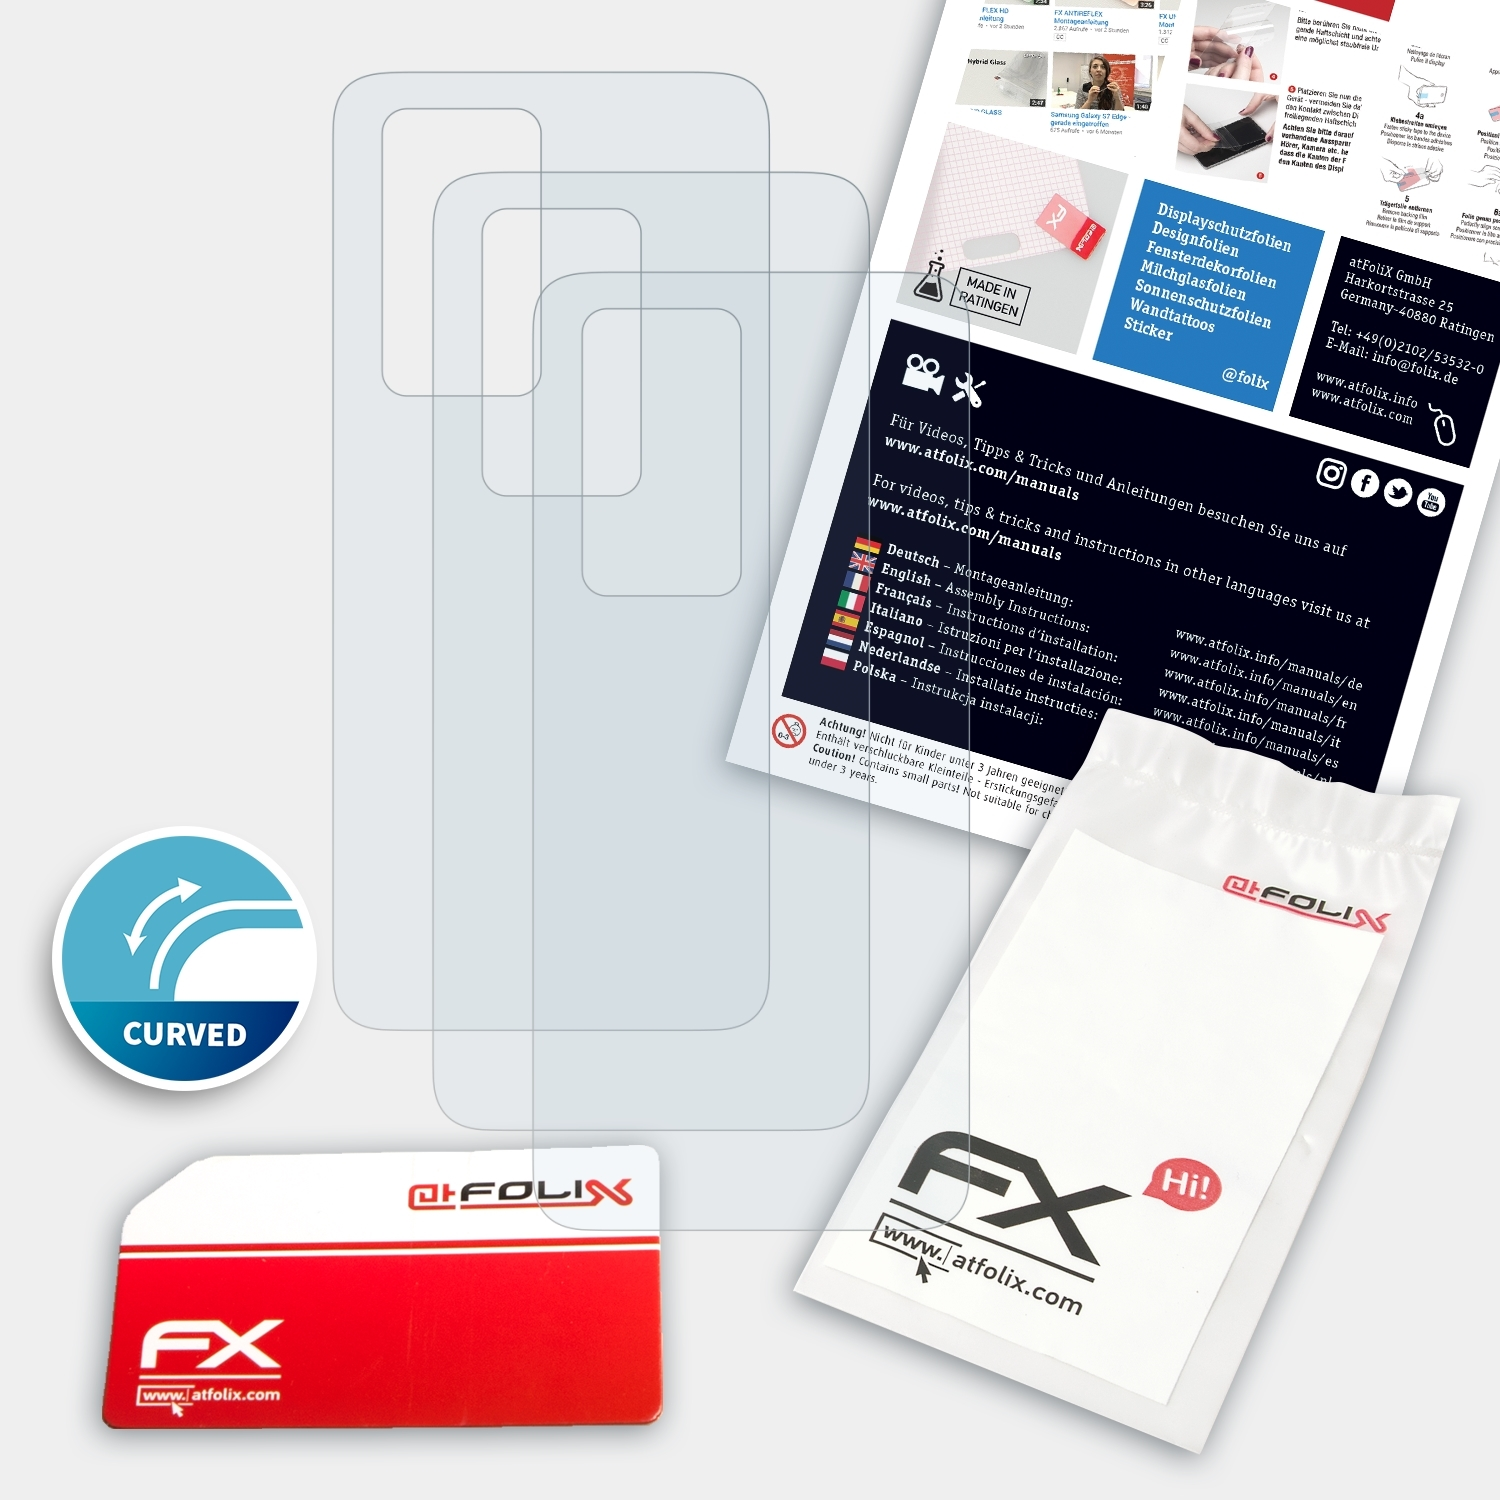 P40 Huawei 3x FX-ActiFleX Displayschutz(für Pro ATFOLIX (Backcover))